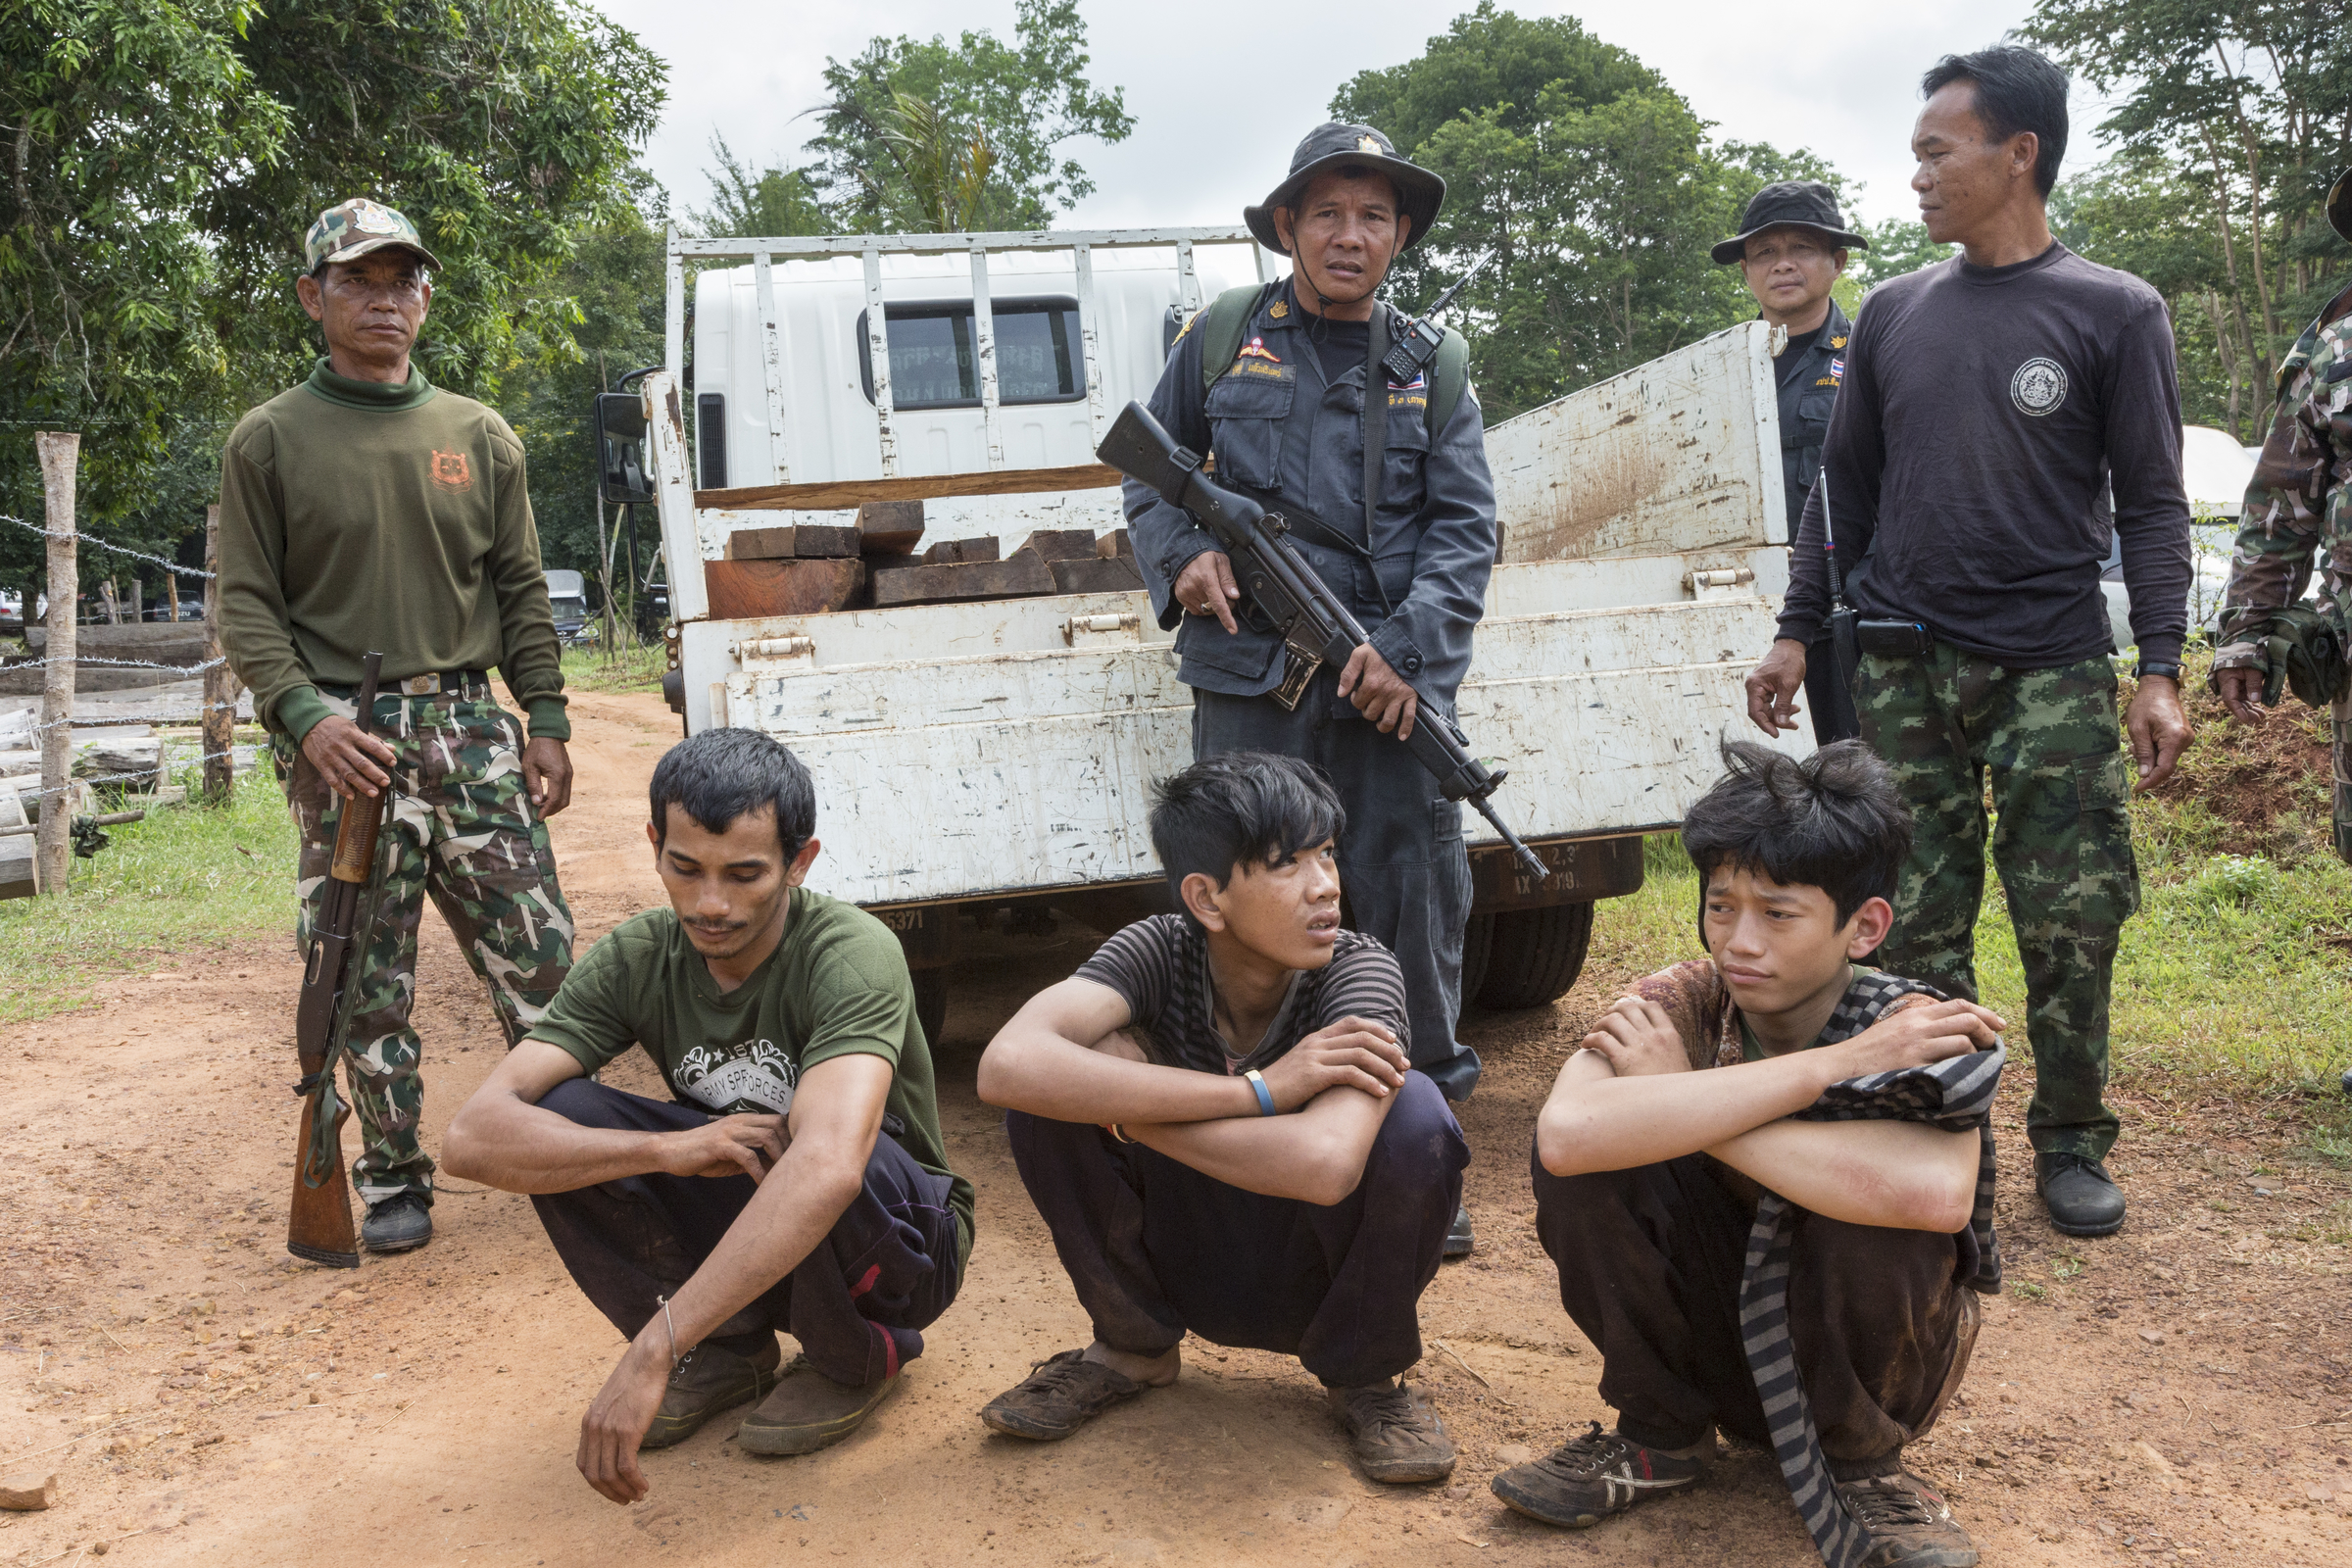 Siam rosewood poachers caught by anti-poaching patrol